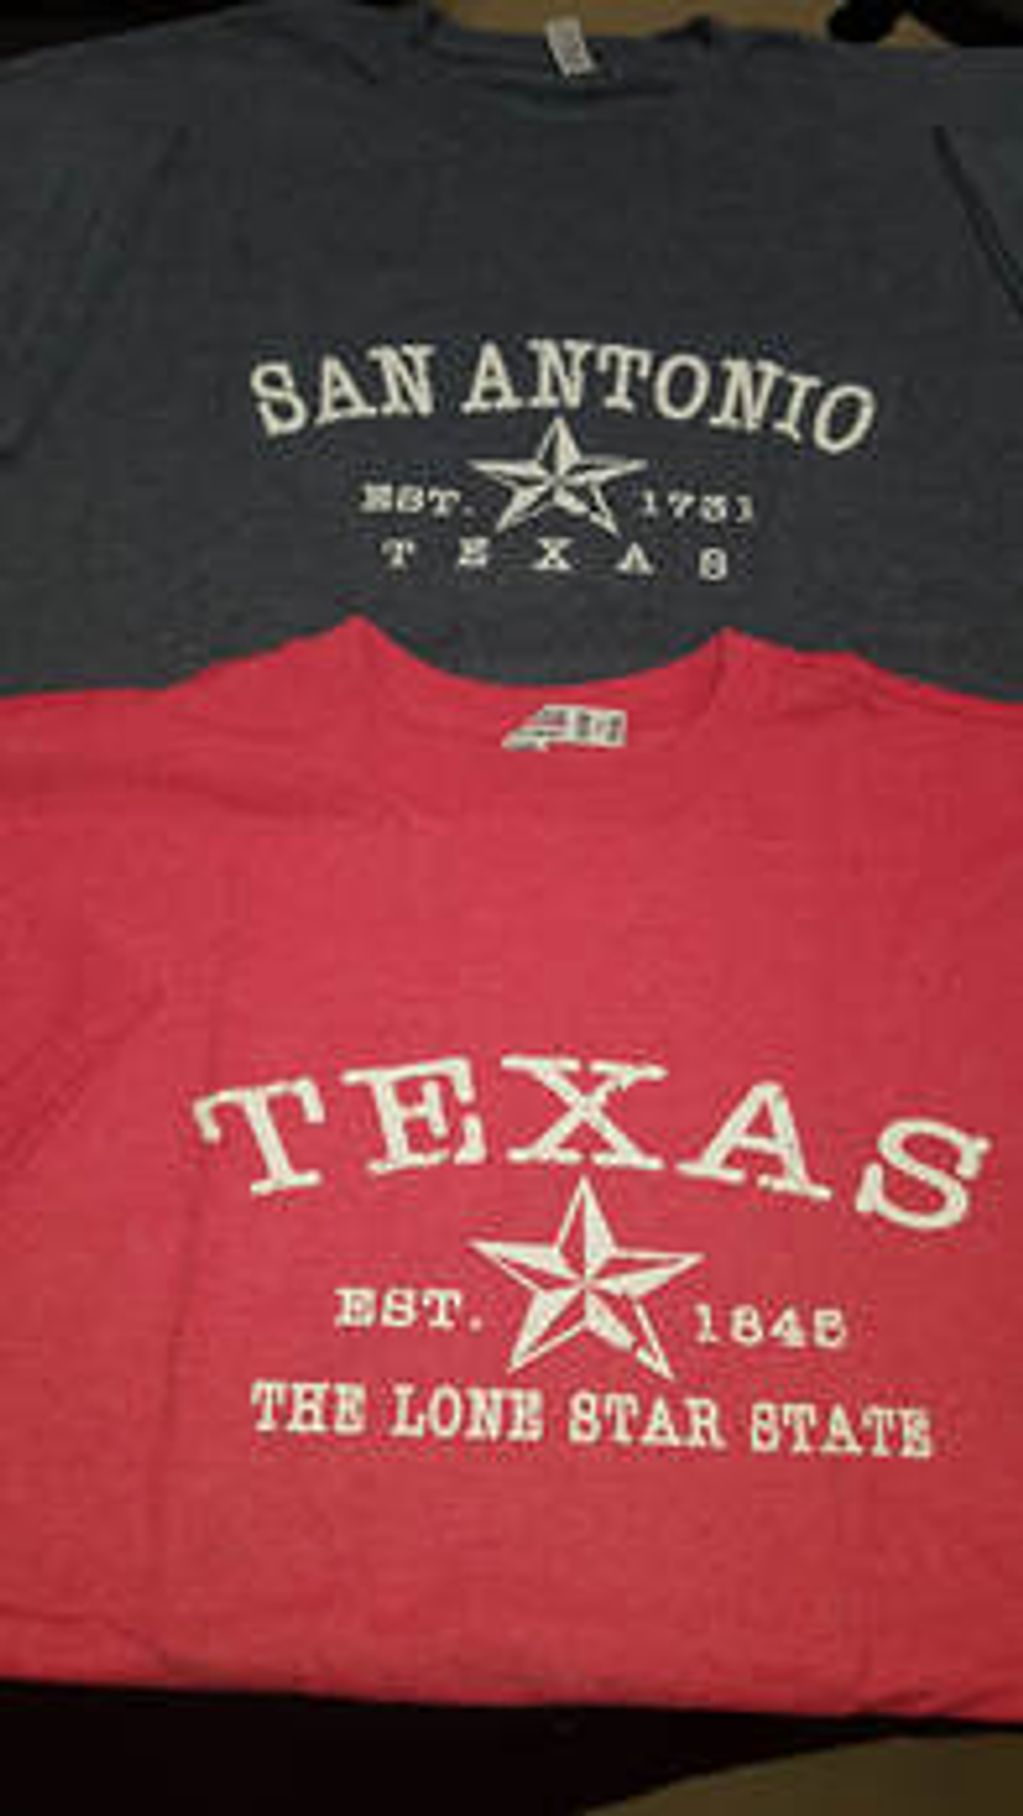 Texas Shirts - San Antonio and TLS 

San Antonio with a Star Tee H-22

Texas with a Star Tee T-84